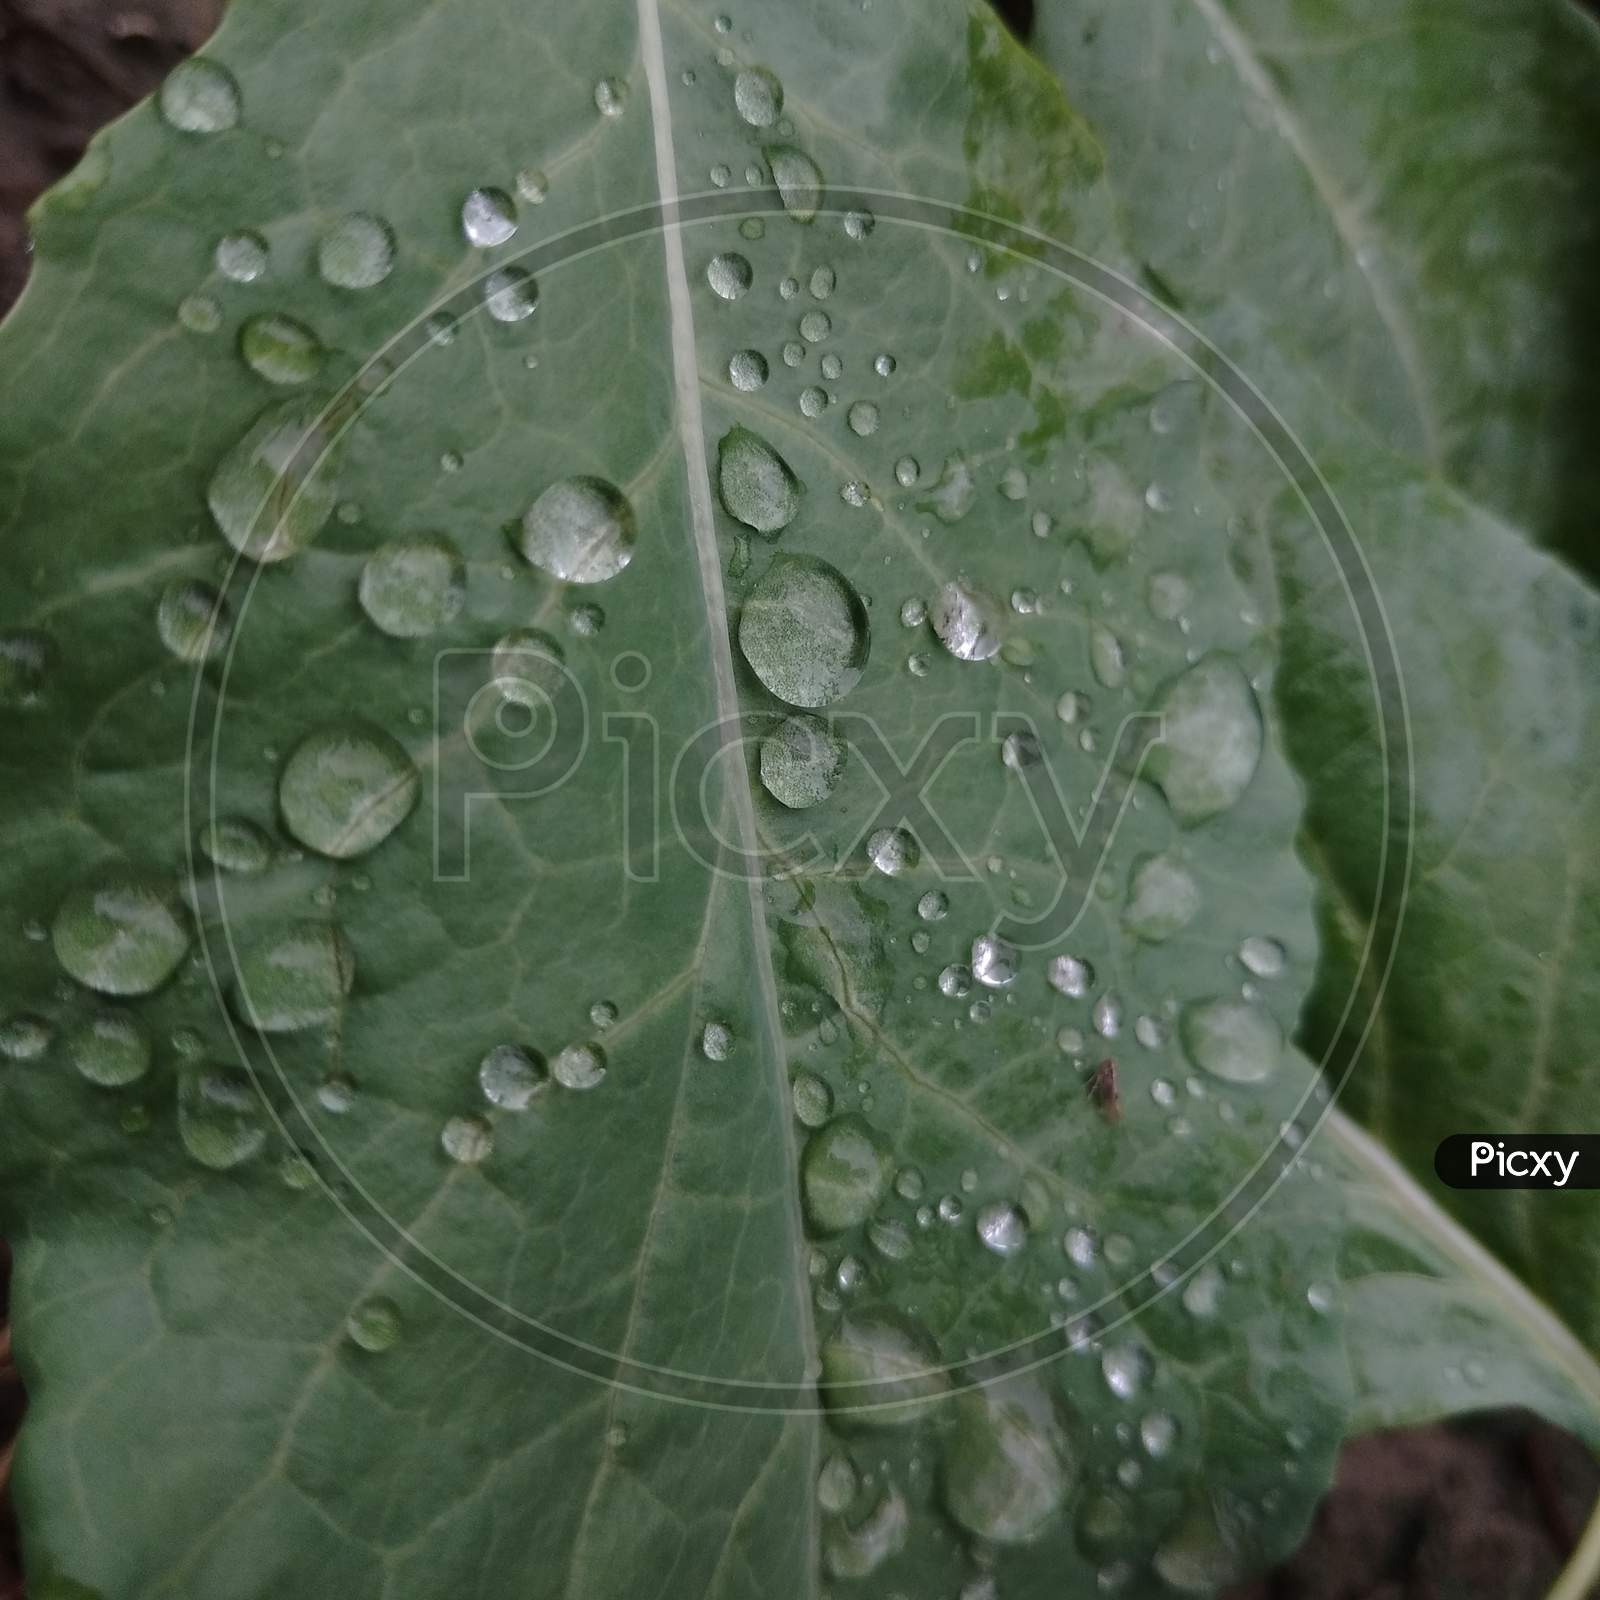 Cauliflower leaf with water drops